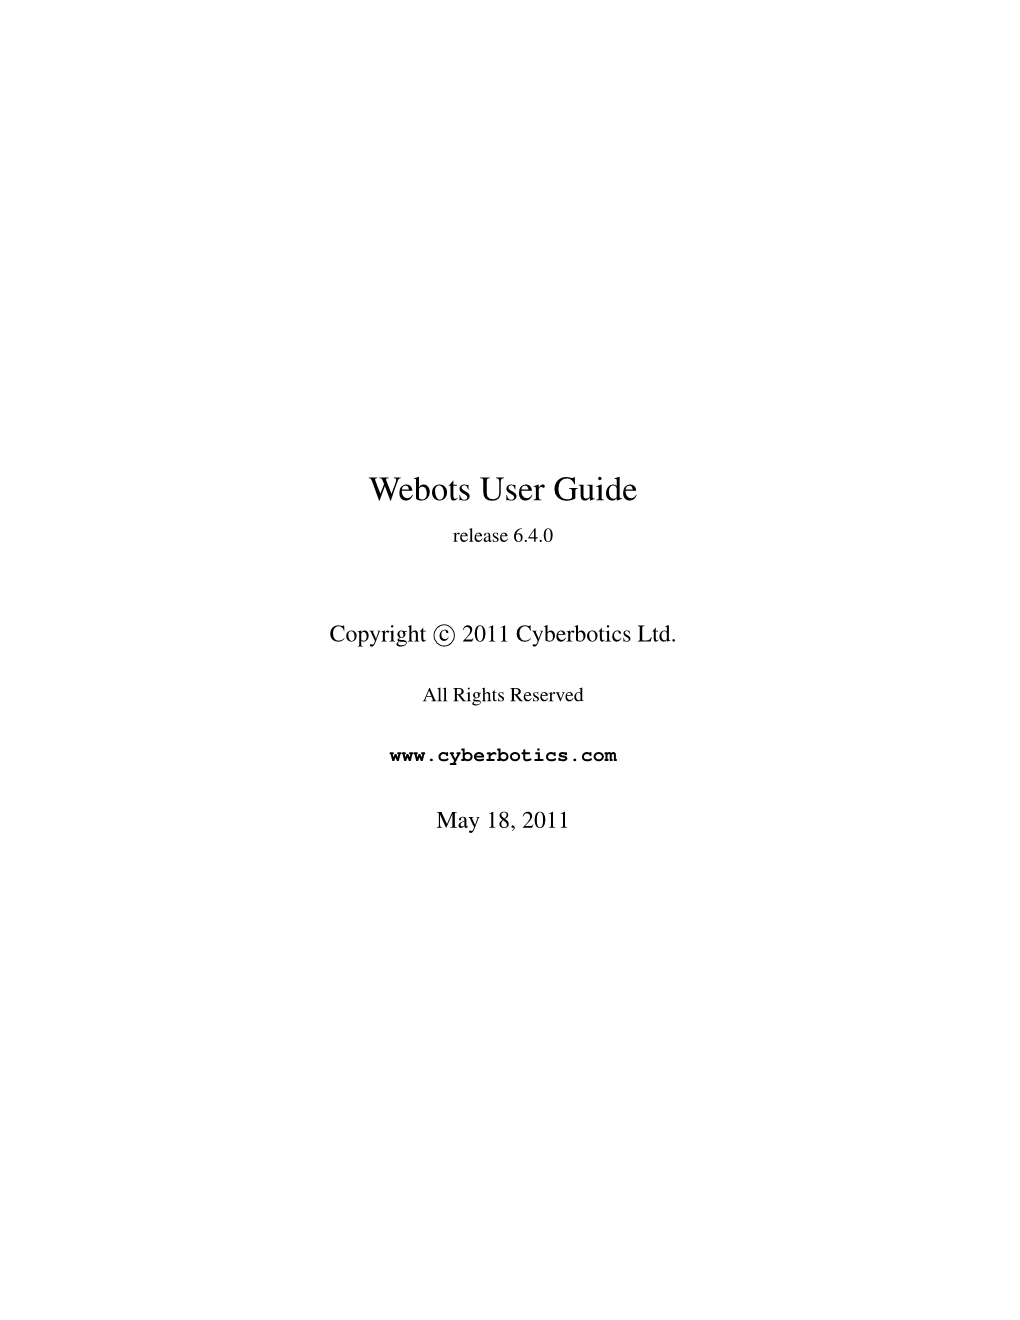 Webots User Guide Release 6.4.0